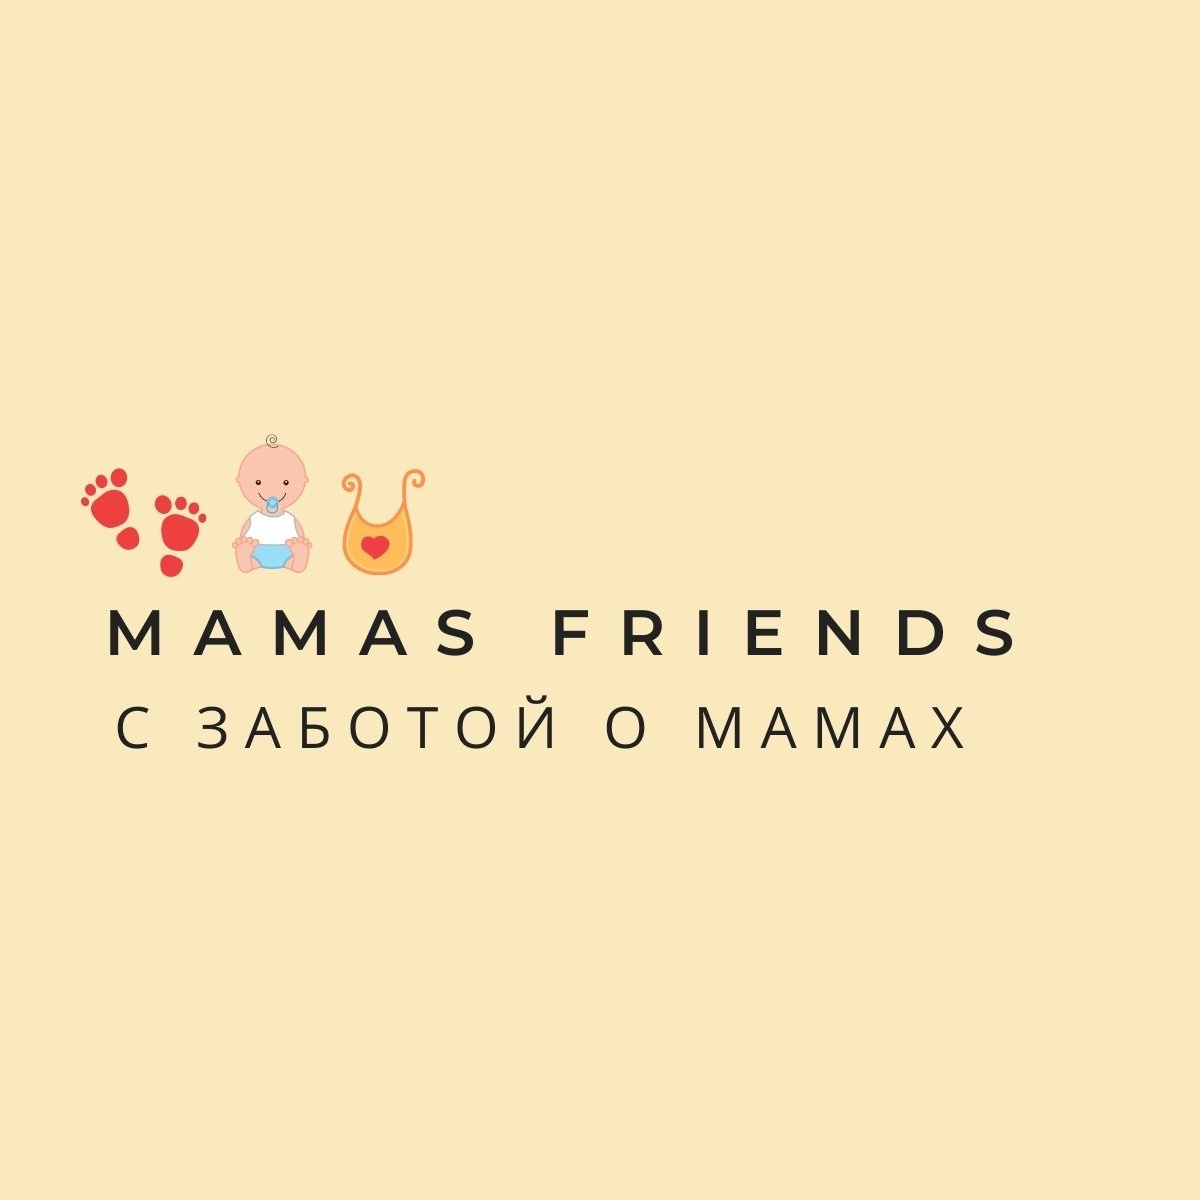 Mamas Friends